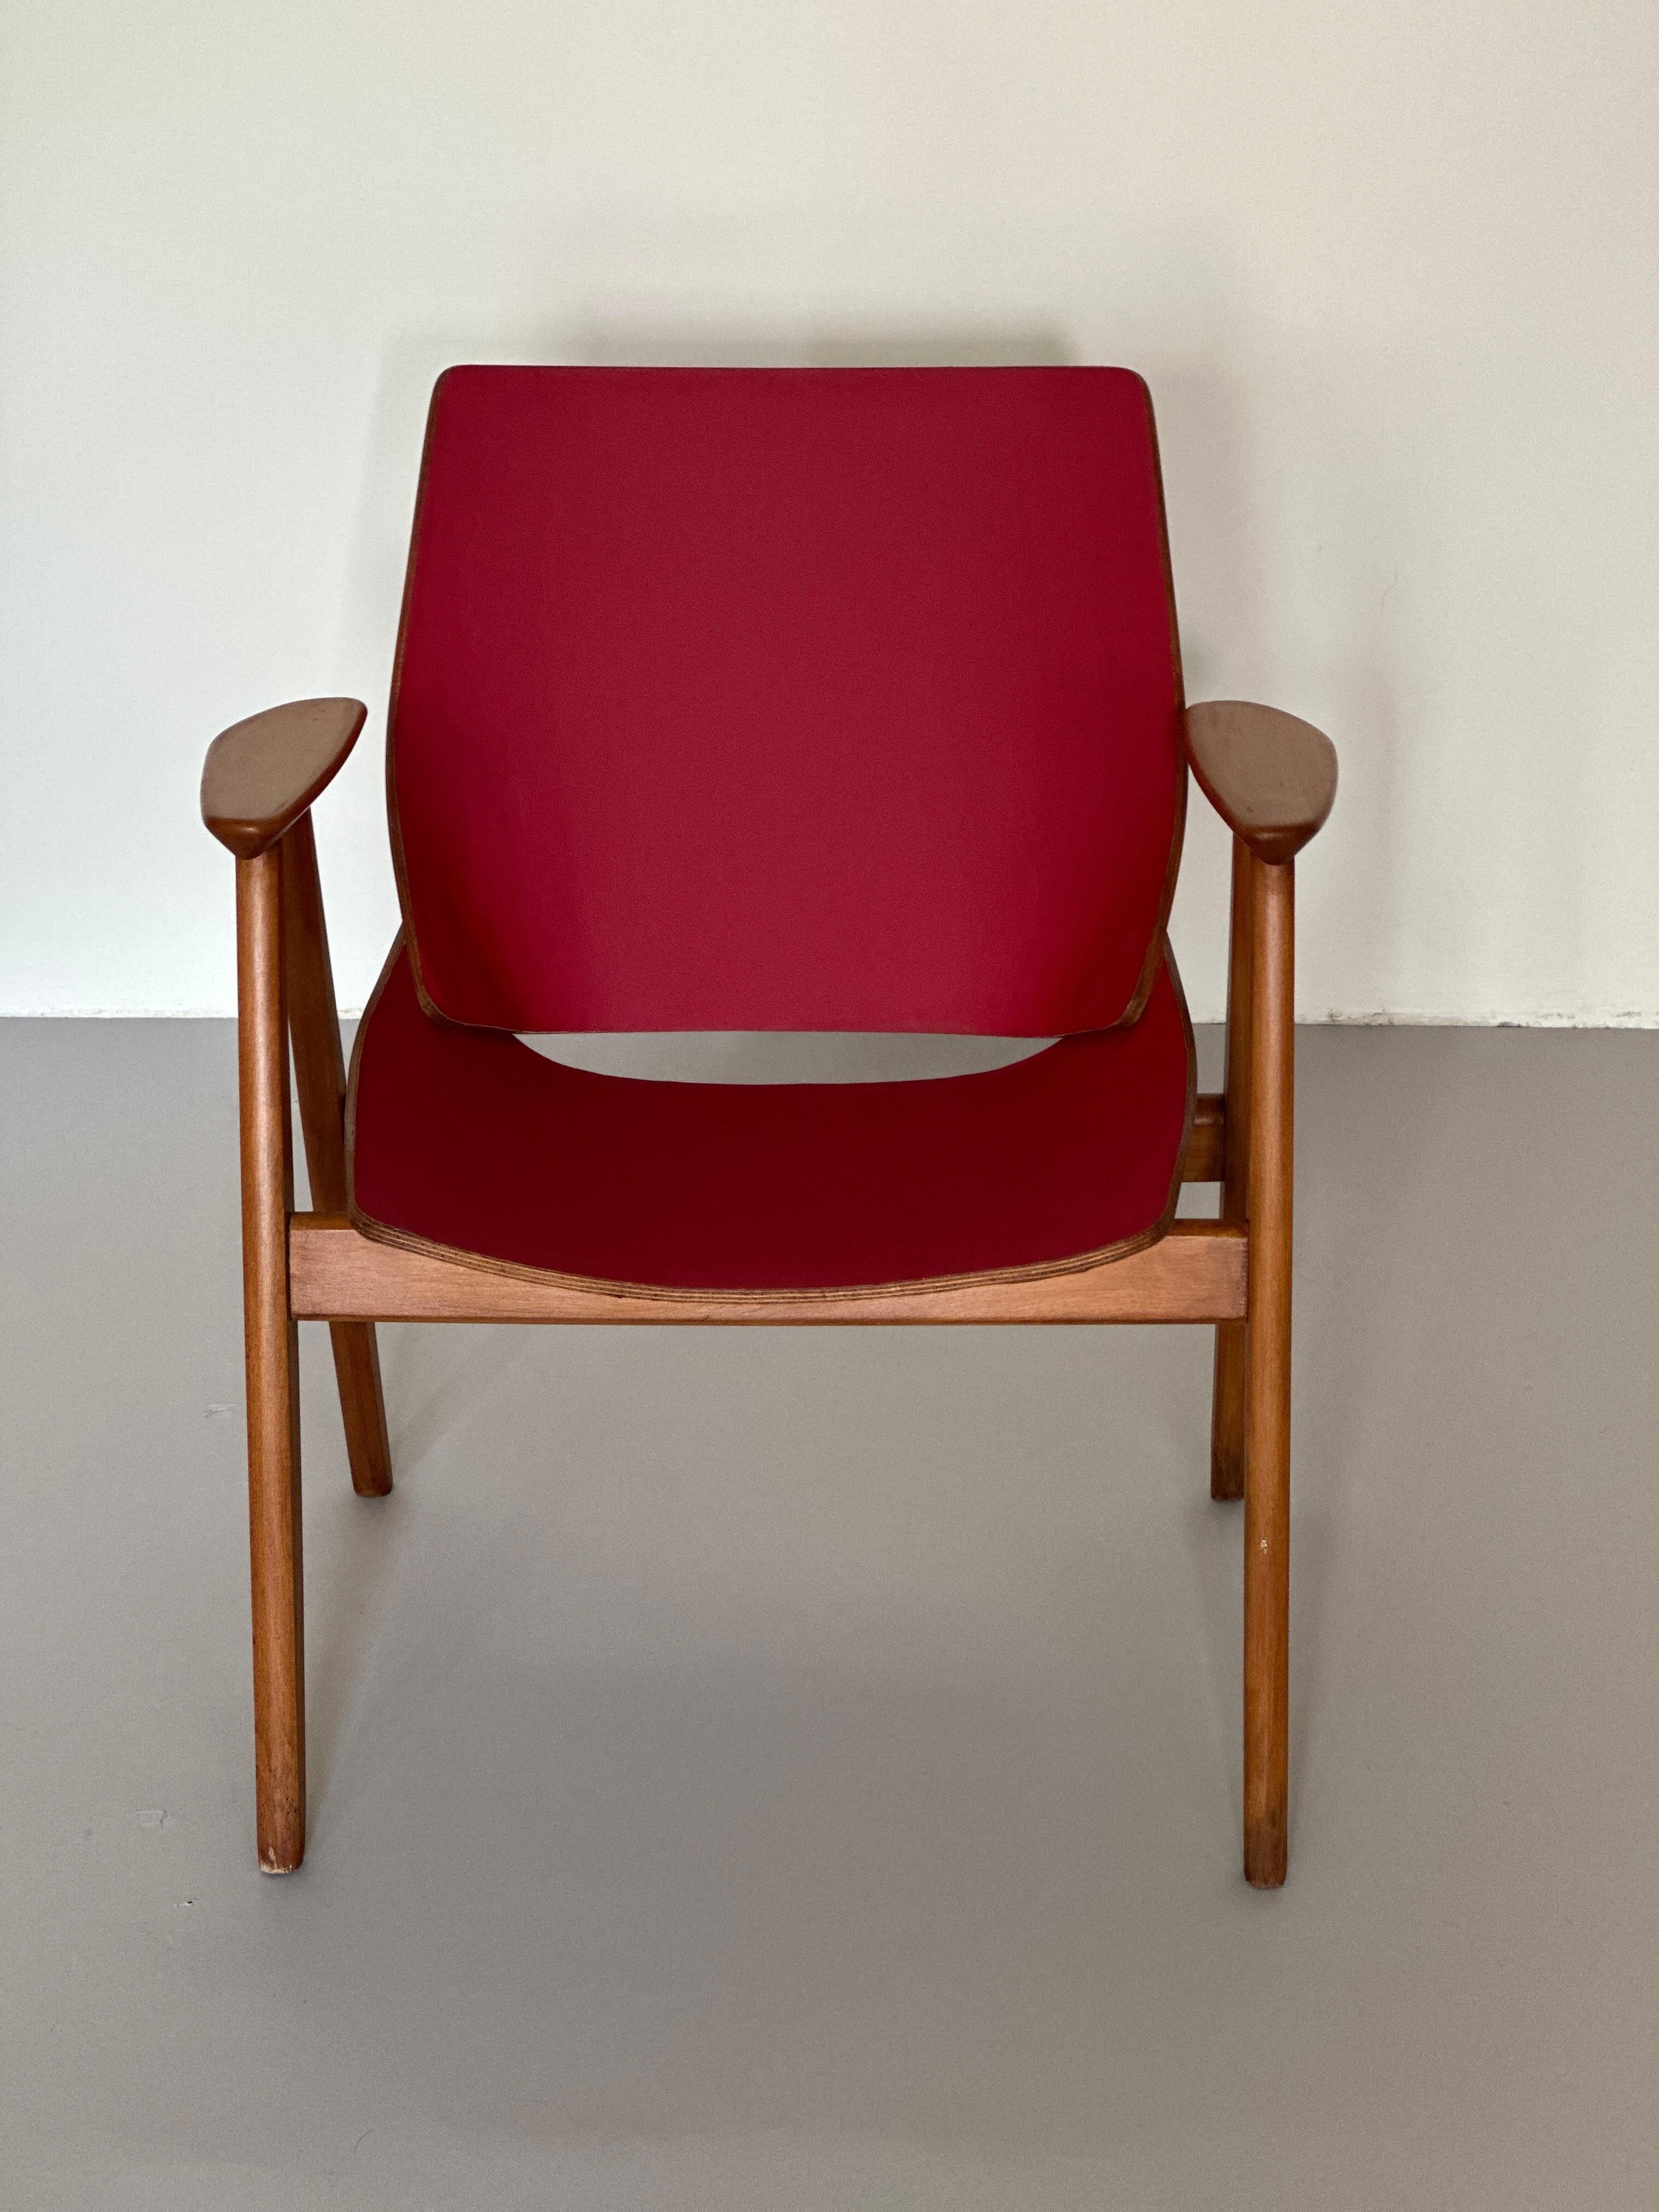 Lupina chair by Niko Kralj for Stol Kamnik Slovenia 1950s.